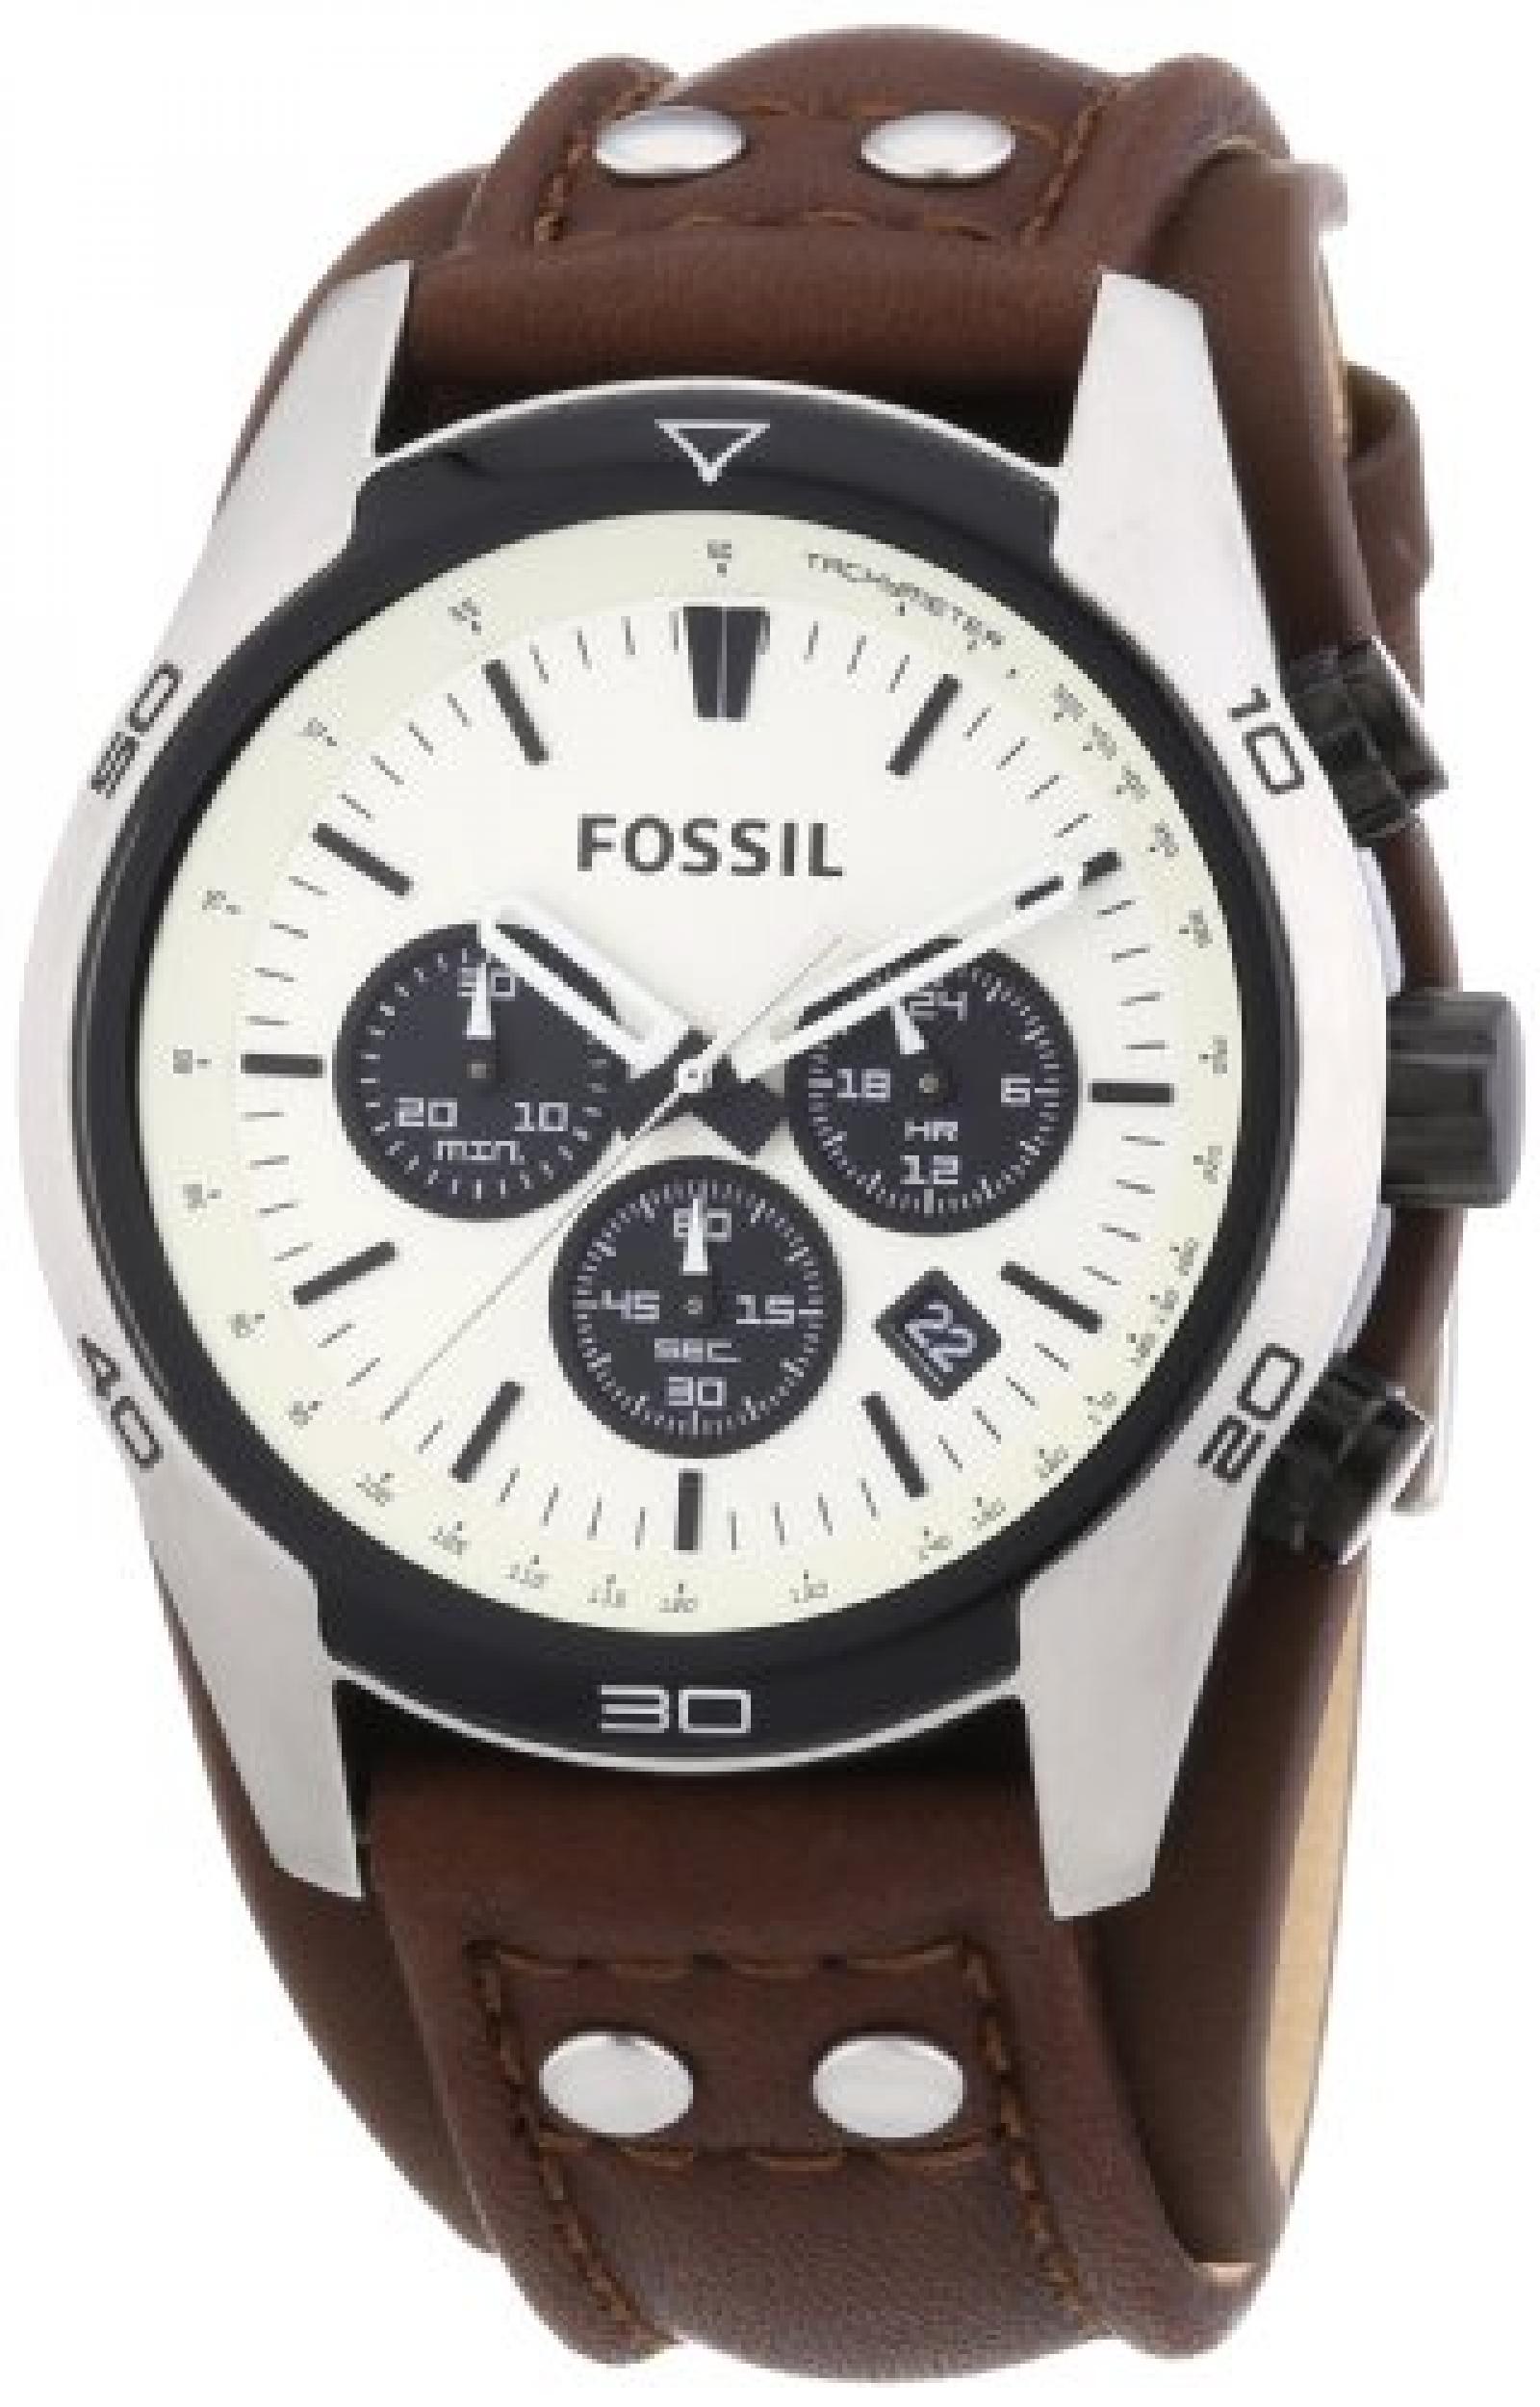 Fossil Coachman Herren Armbanduhr Sport Chronograph Leder braun CH2890 